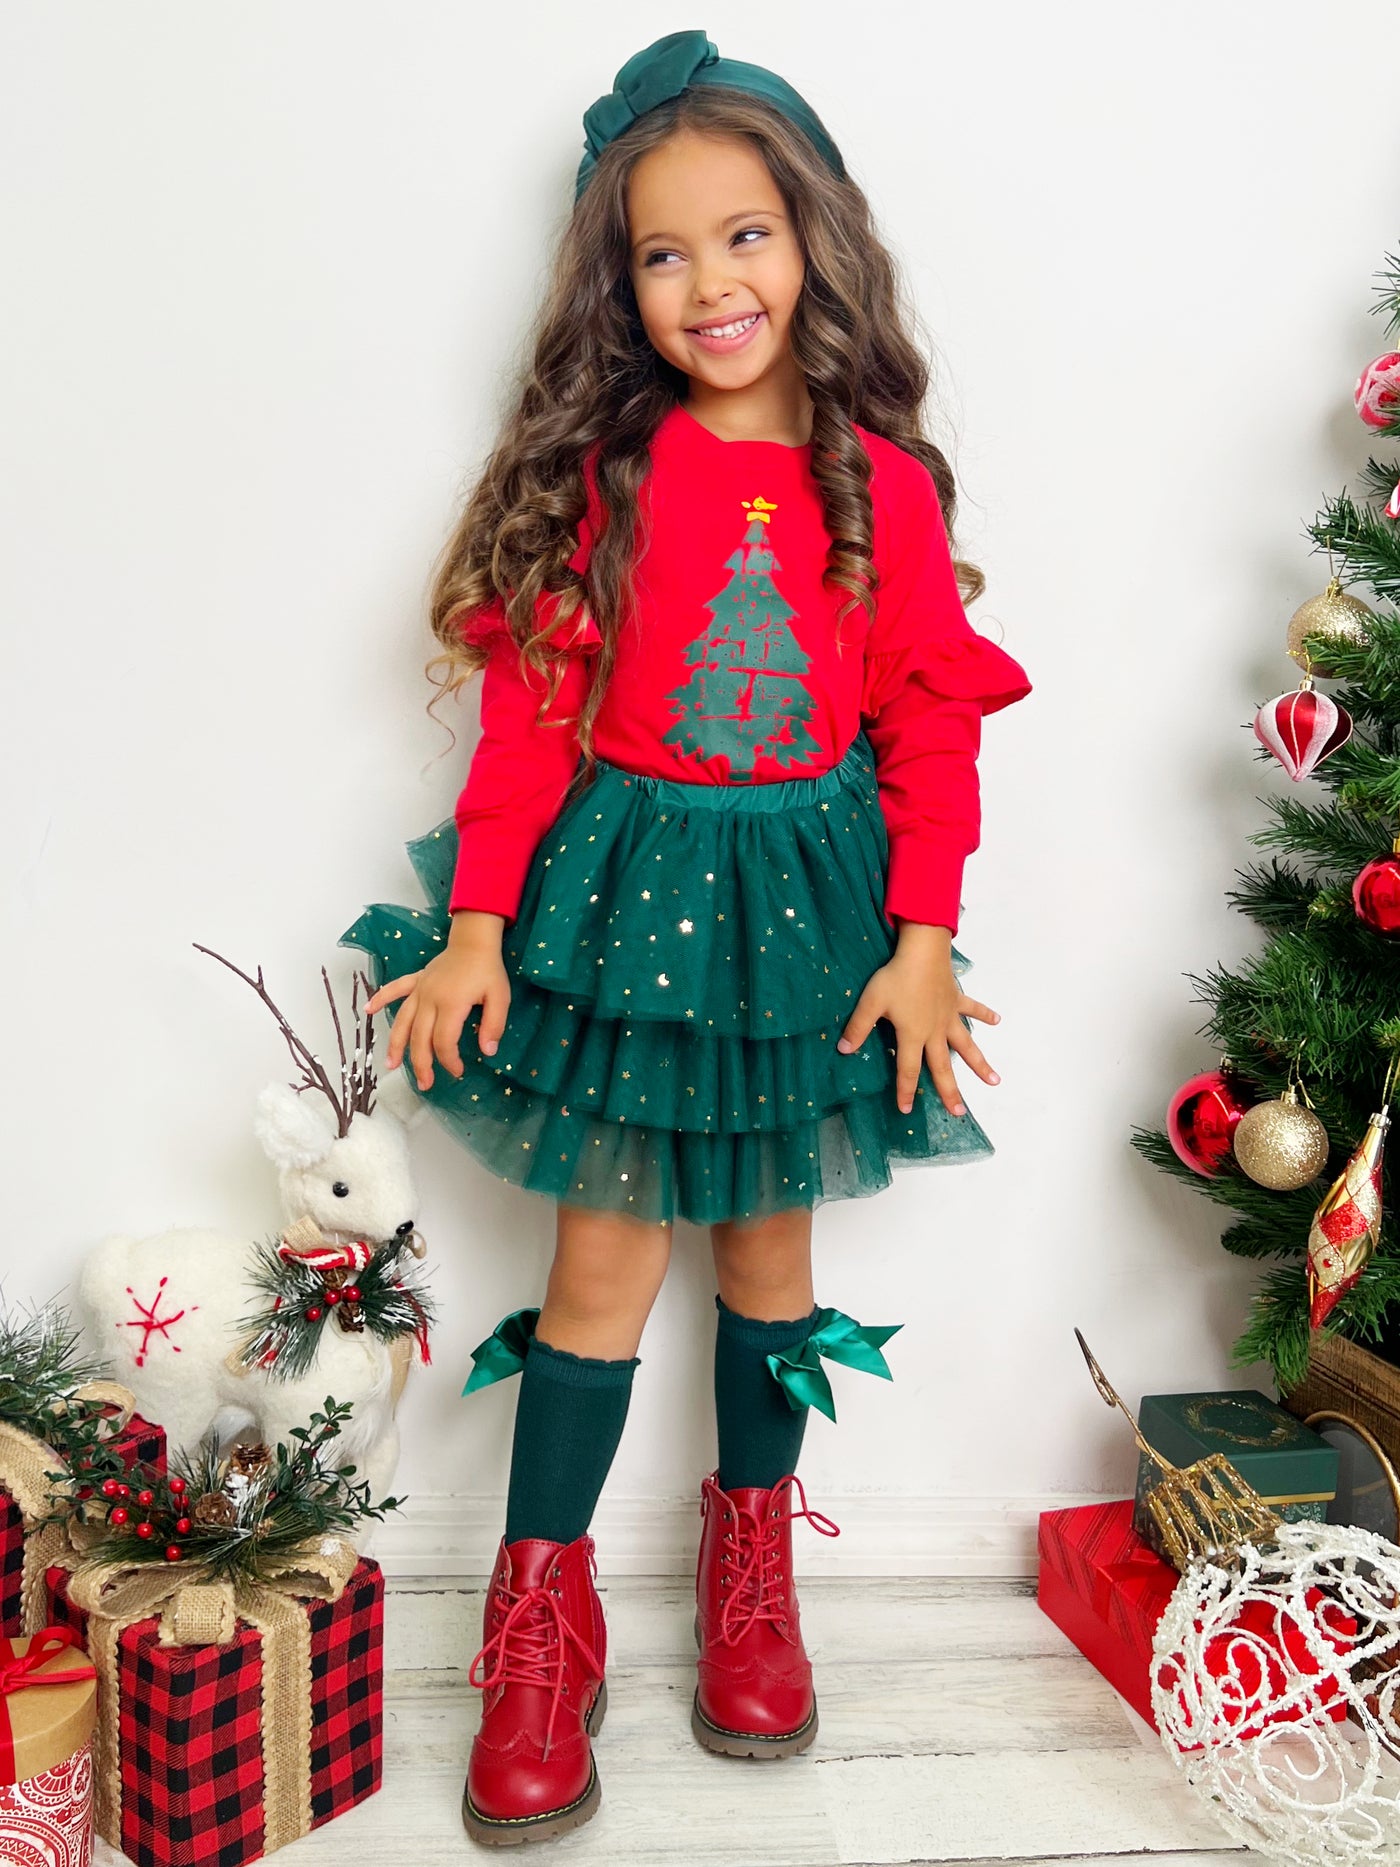 Mia Belle Girls Christmas Tree Tutu Skirt Set | Girls Holiday Dresses